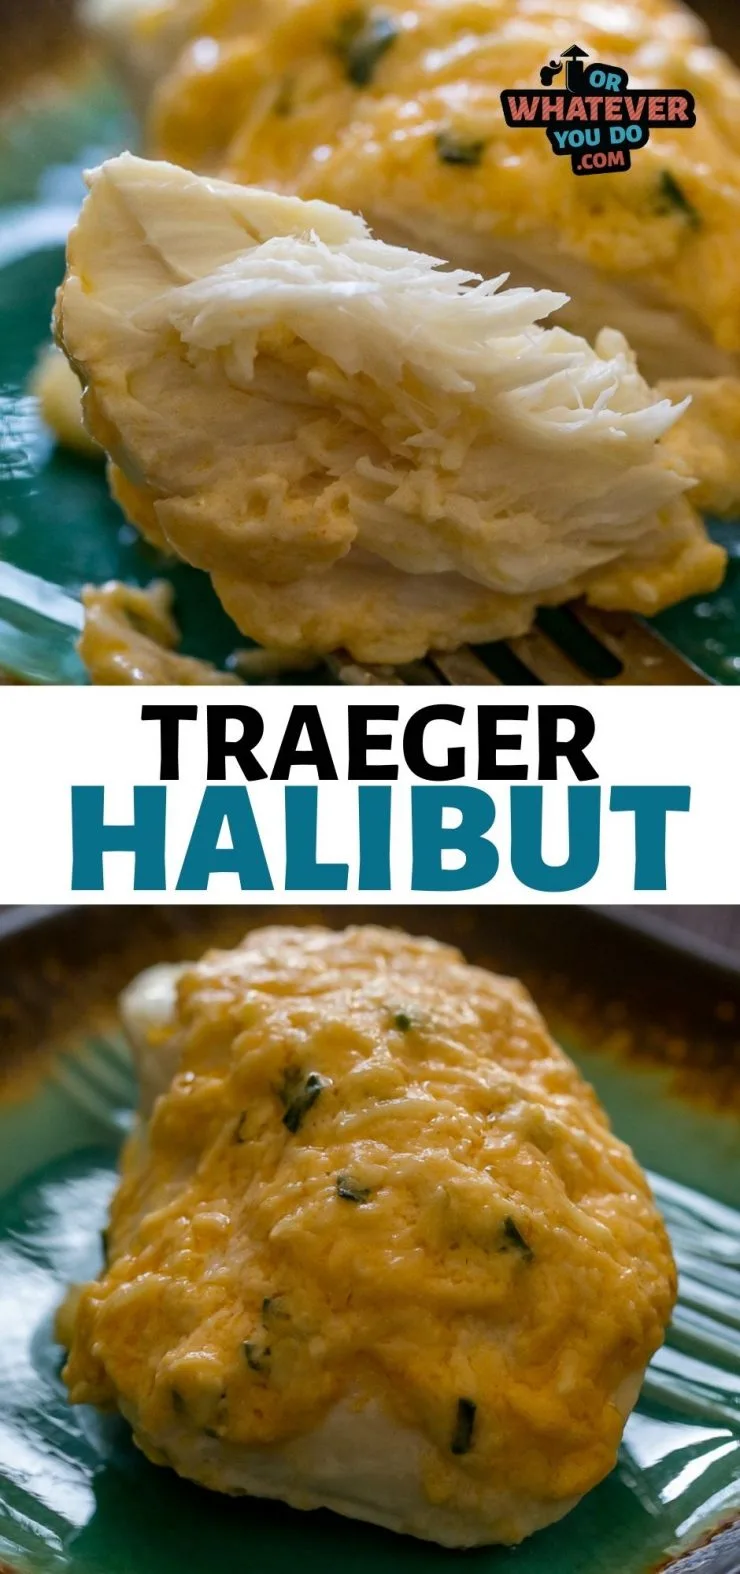 Traeger Halibut with Parmesan Crust